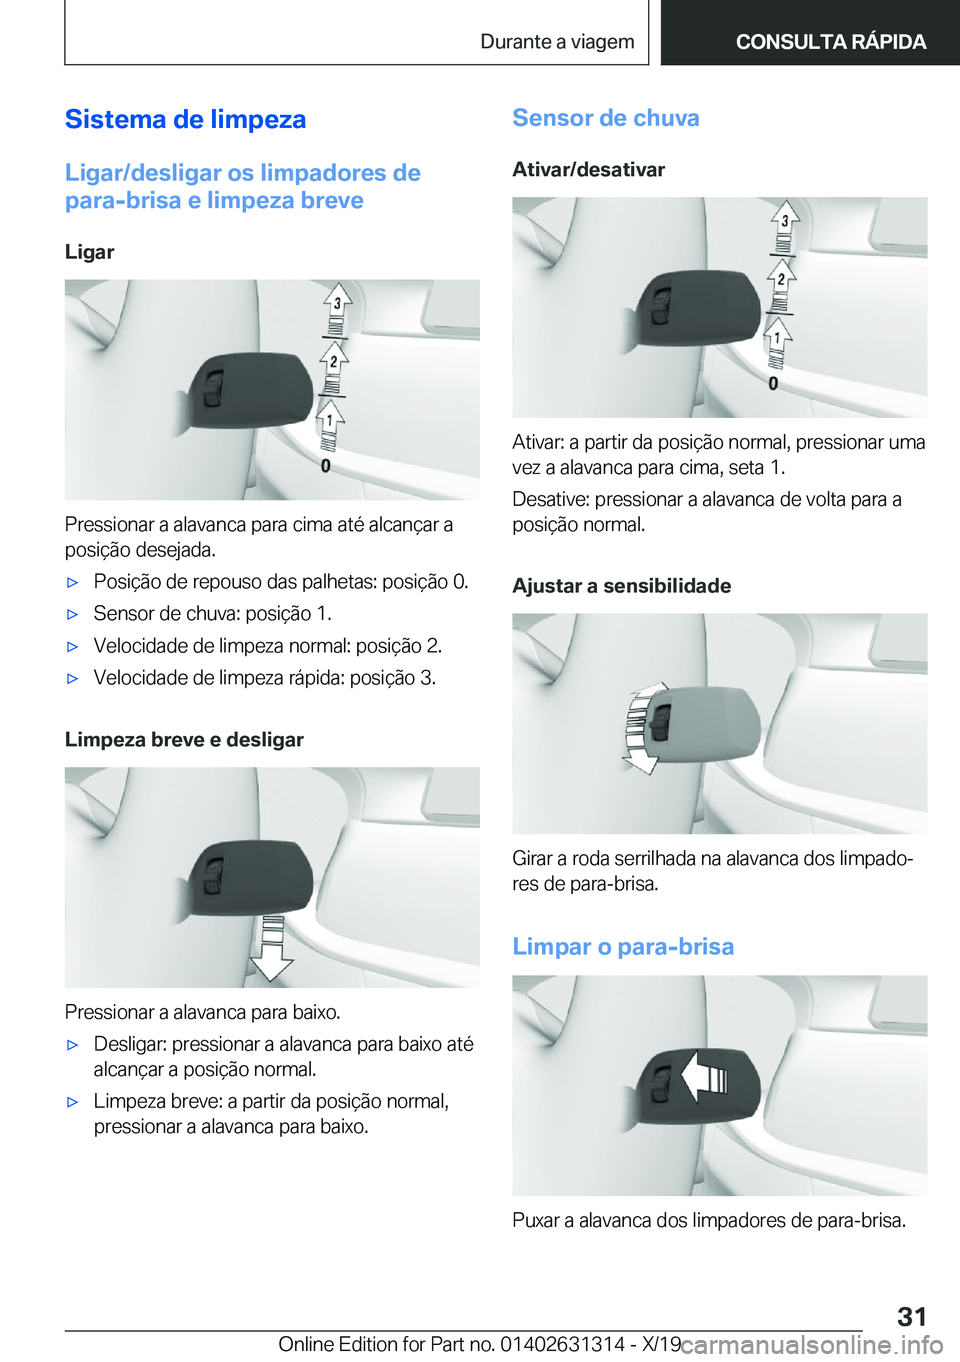 BMW M8 2020  Manual do condutor (in Portuguese) �S�i�s�t�e�m�a��d�e��l�i�m�p�e�z�a
�L�i�g�a�r�/�d�e�s�l�i�g�a�r��o�s��l�i�m�p�a�d�o�r�e�s��d�e �p�a�r�a�-�b�r�i�s�a��e��l�i�m�p�e�z�a��b�r�e�v�e
�L�i�g�a�r
�P�r�e�s�s�i�o�n�a�r��a��a�l�a�v�a